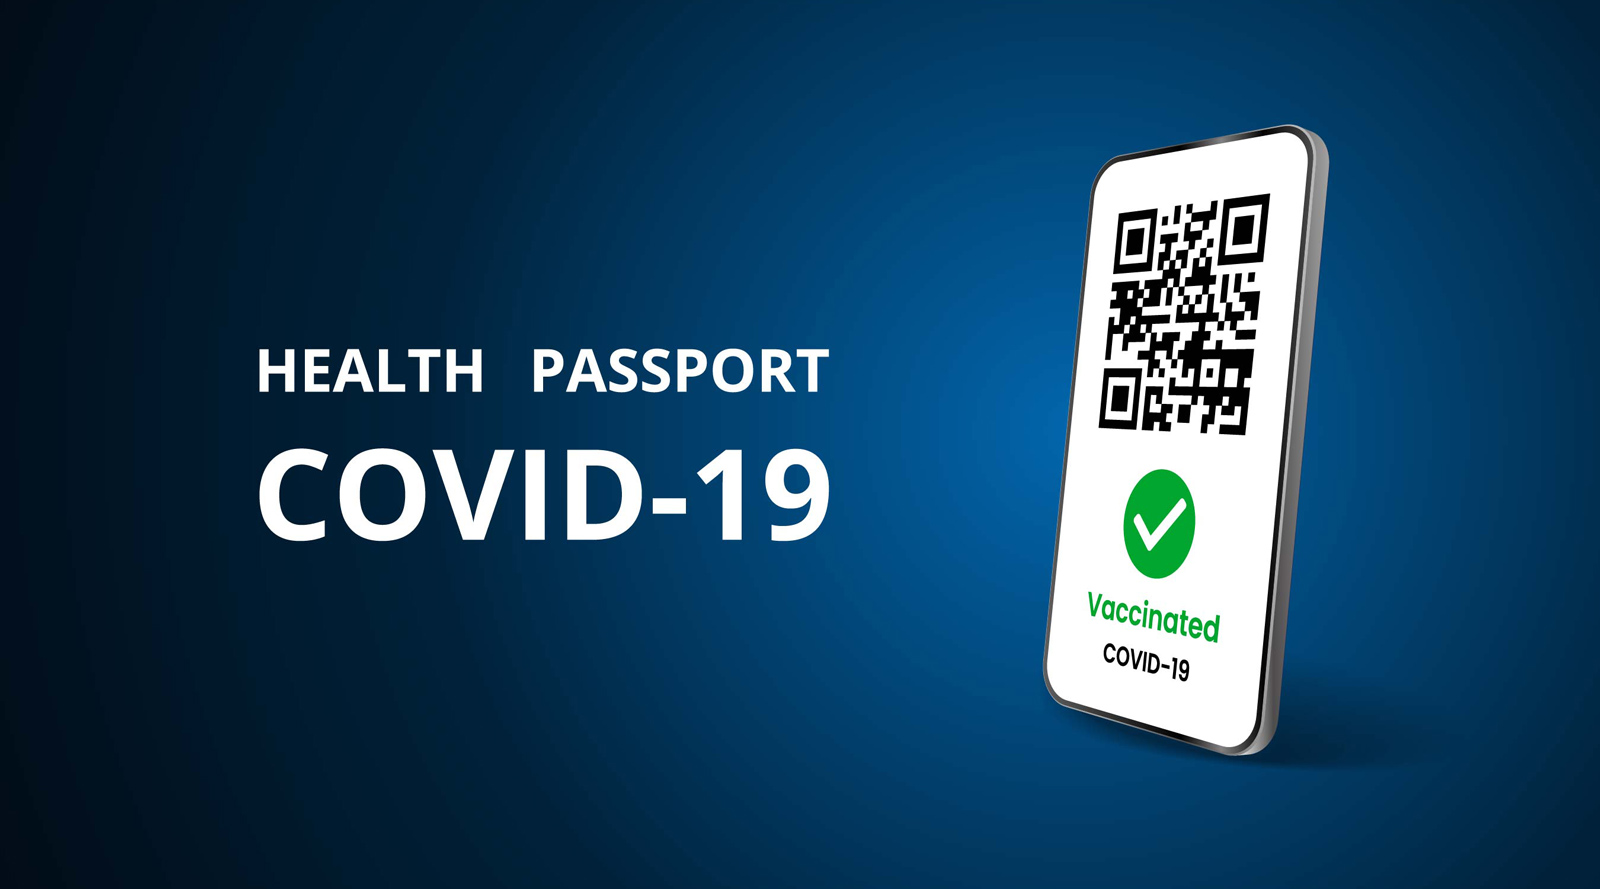 COVID-19 Passport QR Code on smartphone